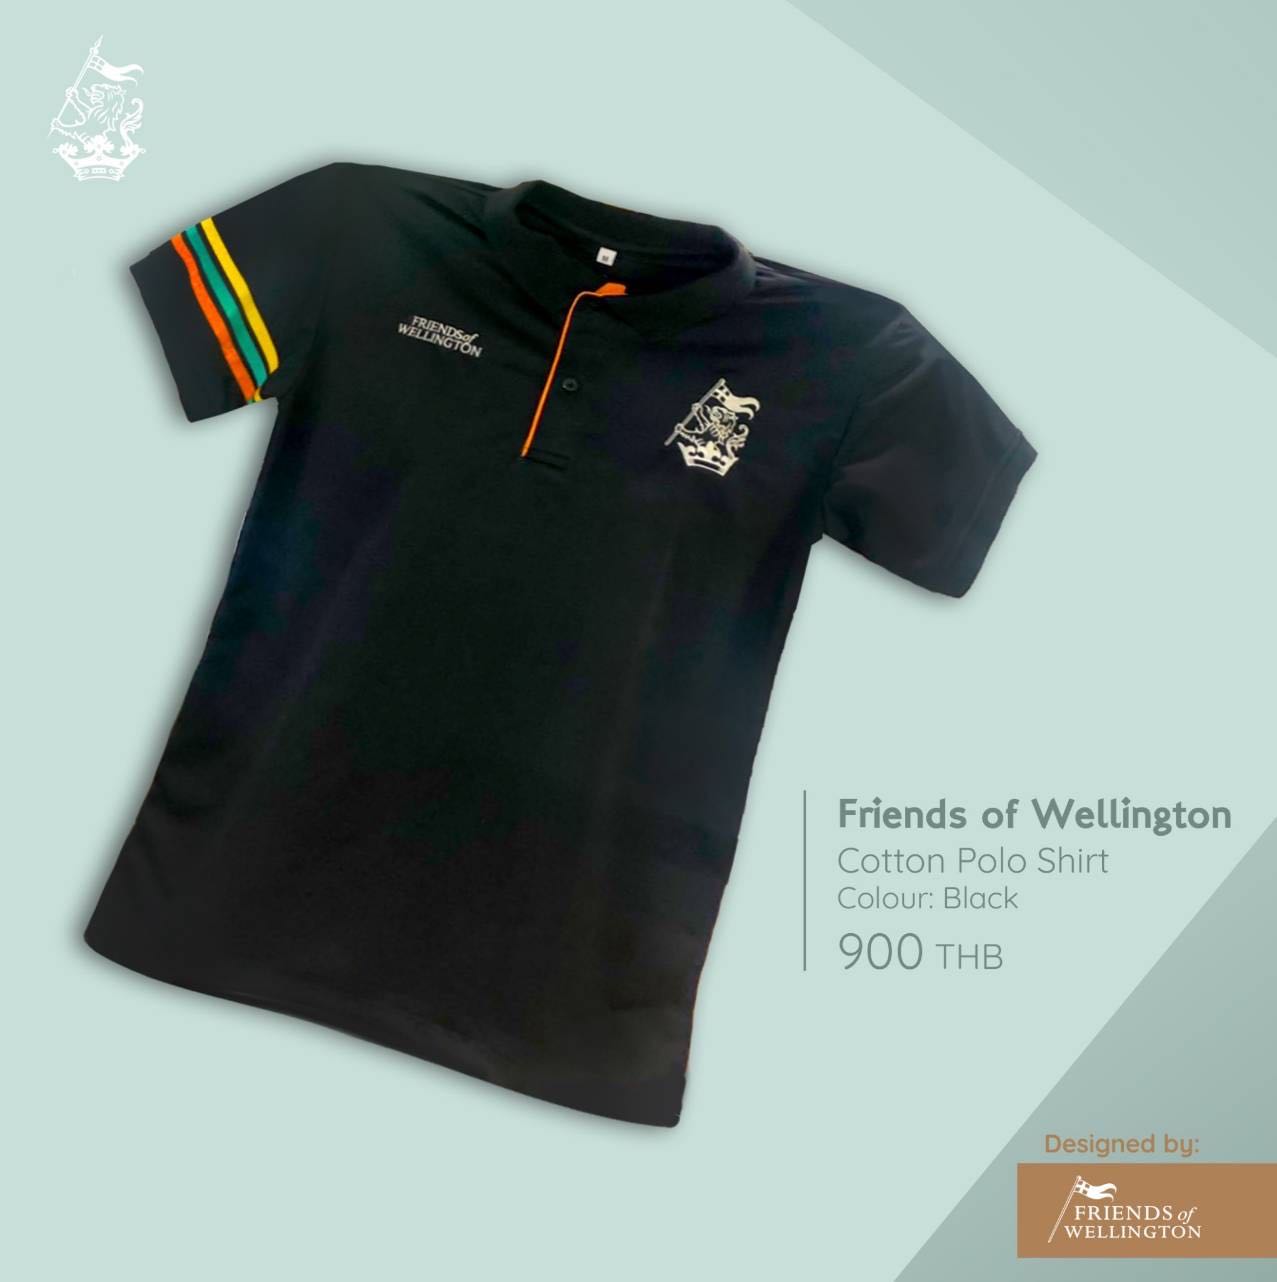 Friends of Wellington Cotton Polo Shirt